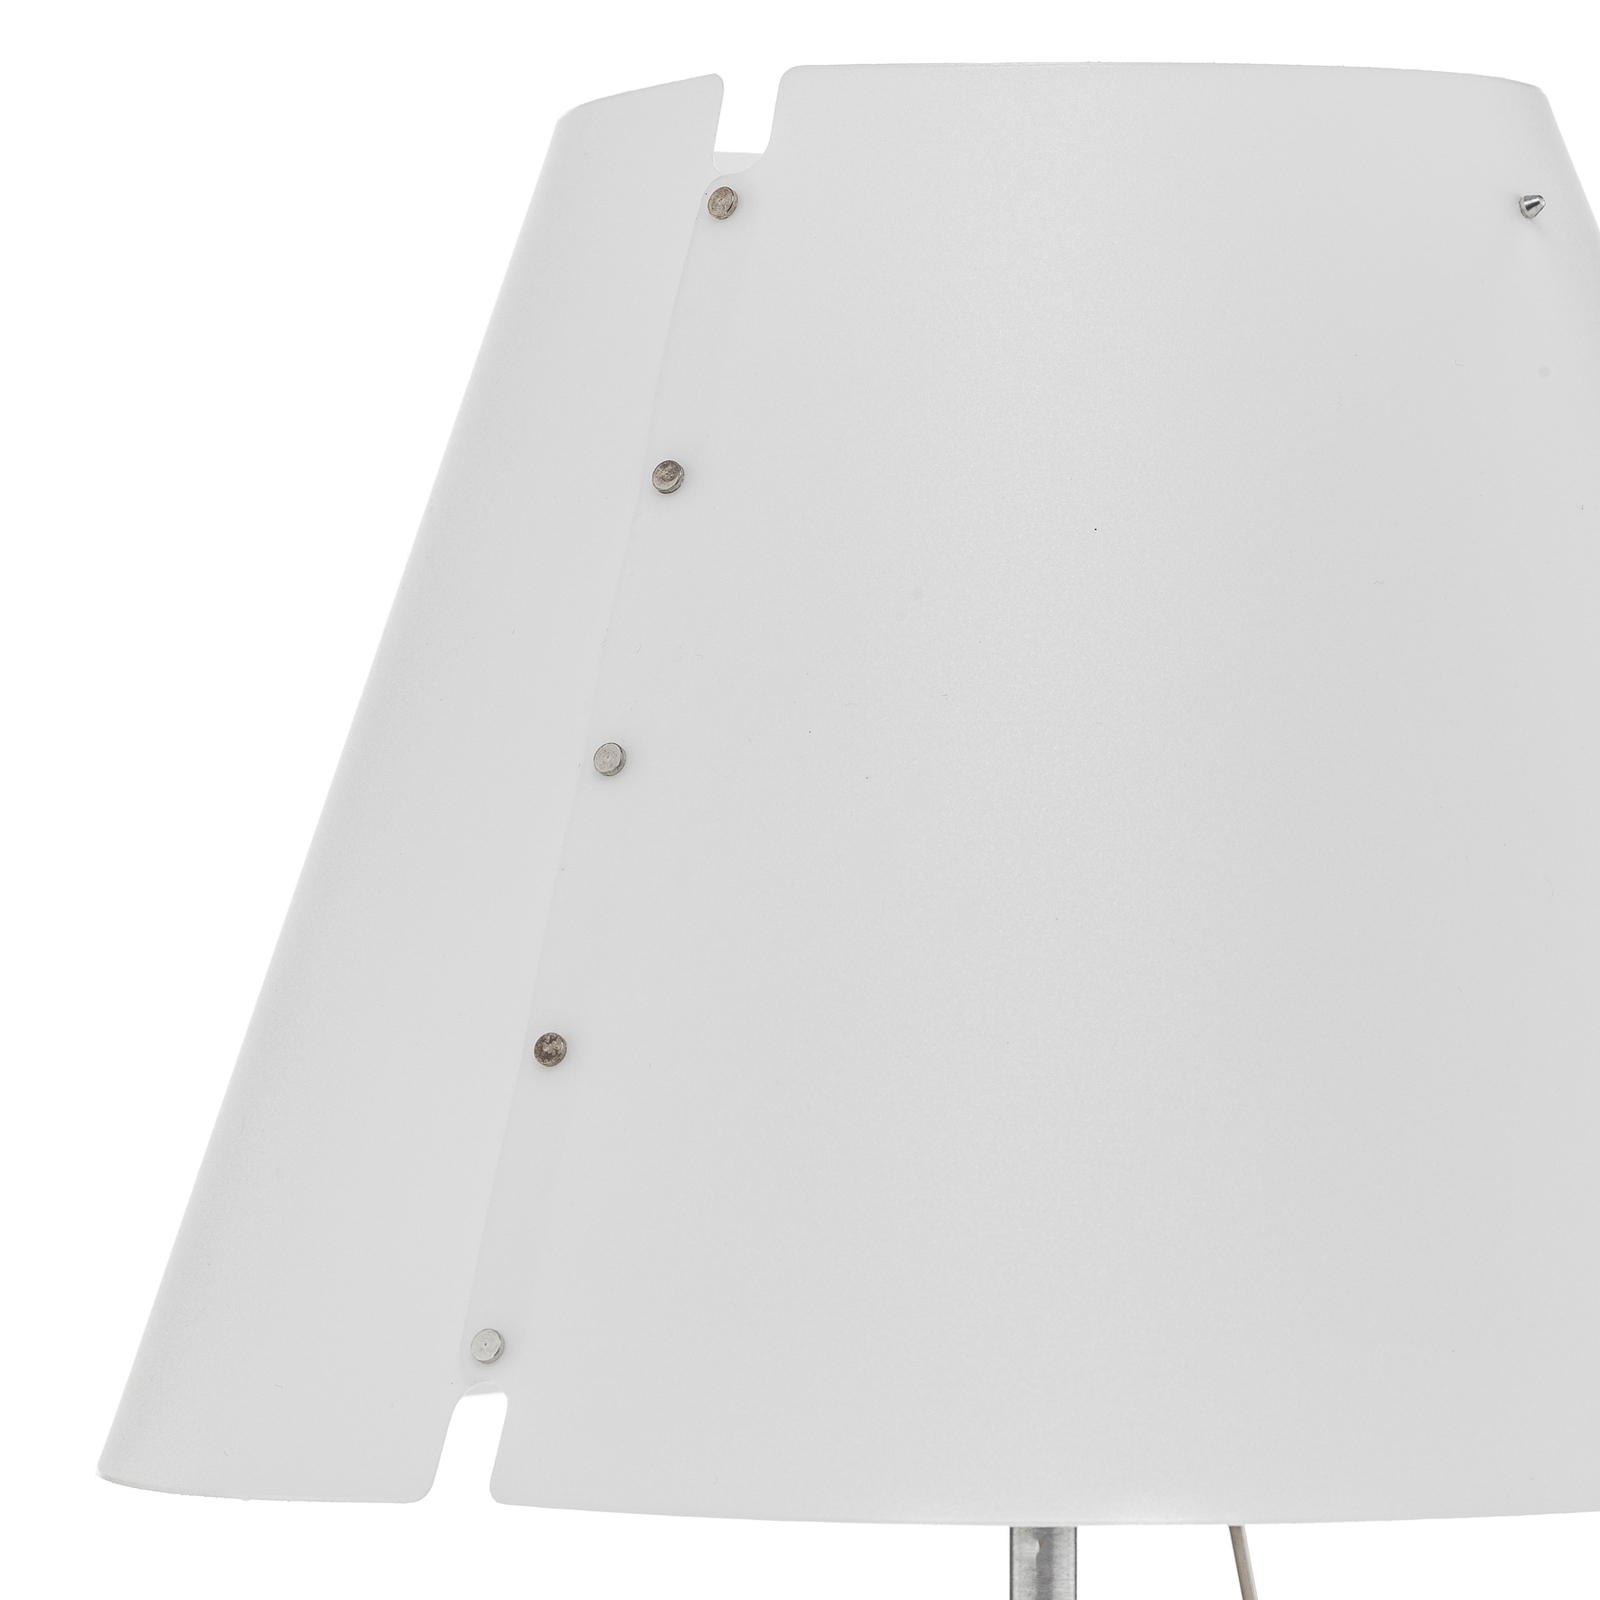 Luceplan Costanzina LED tafellamp alu wit